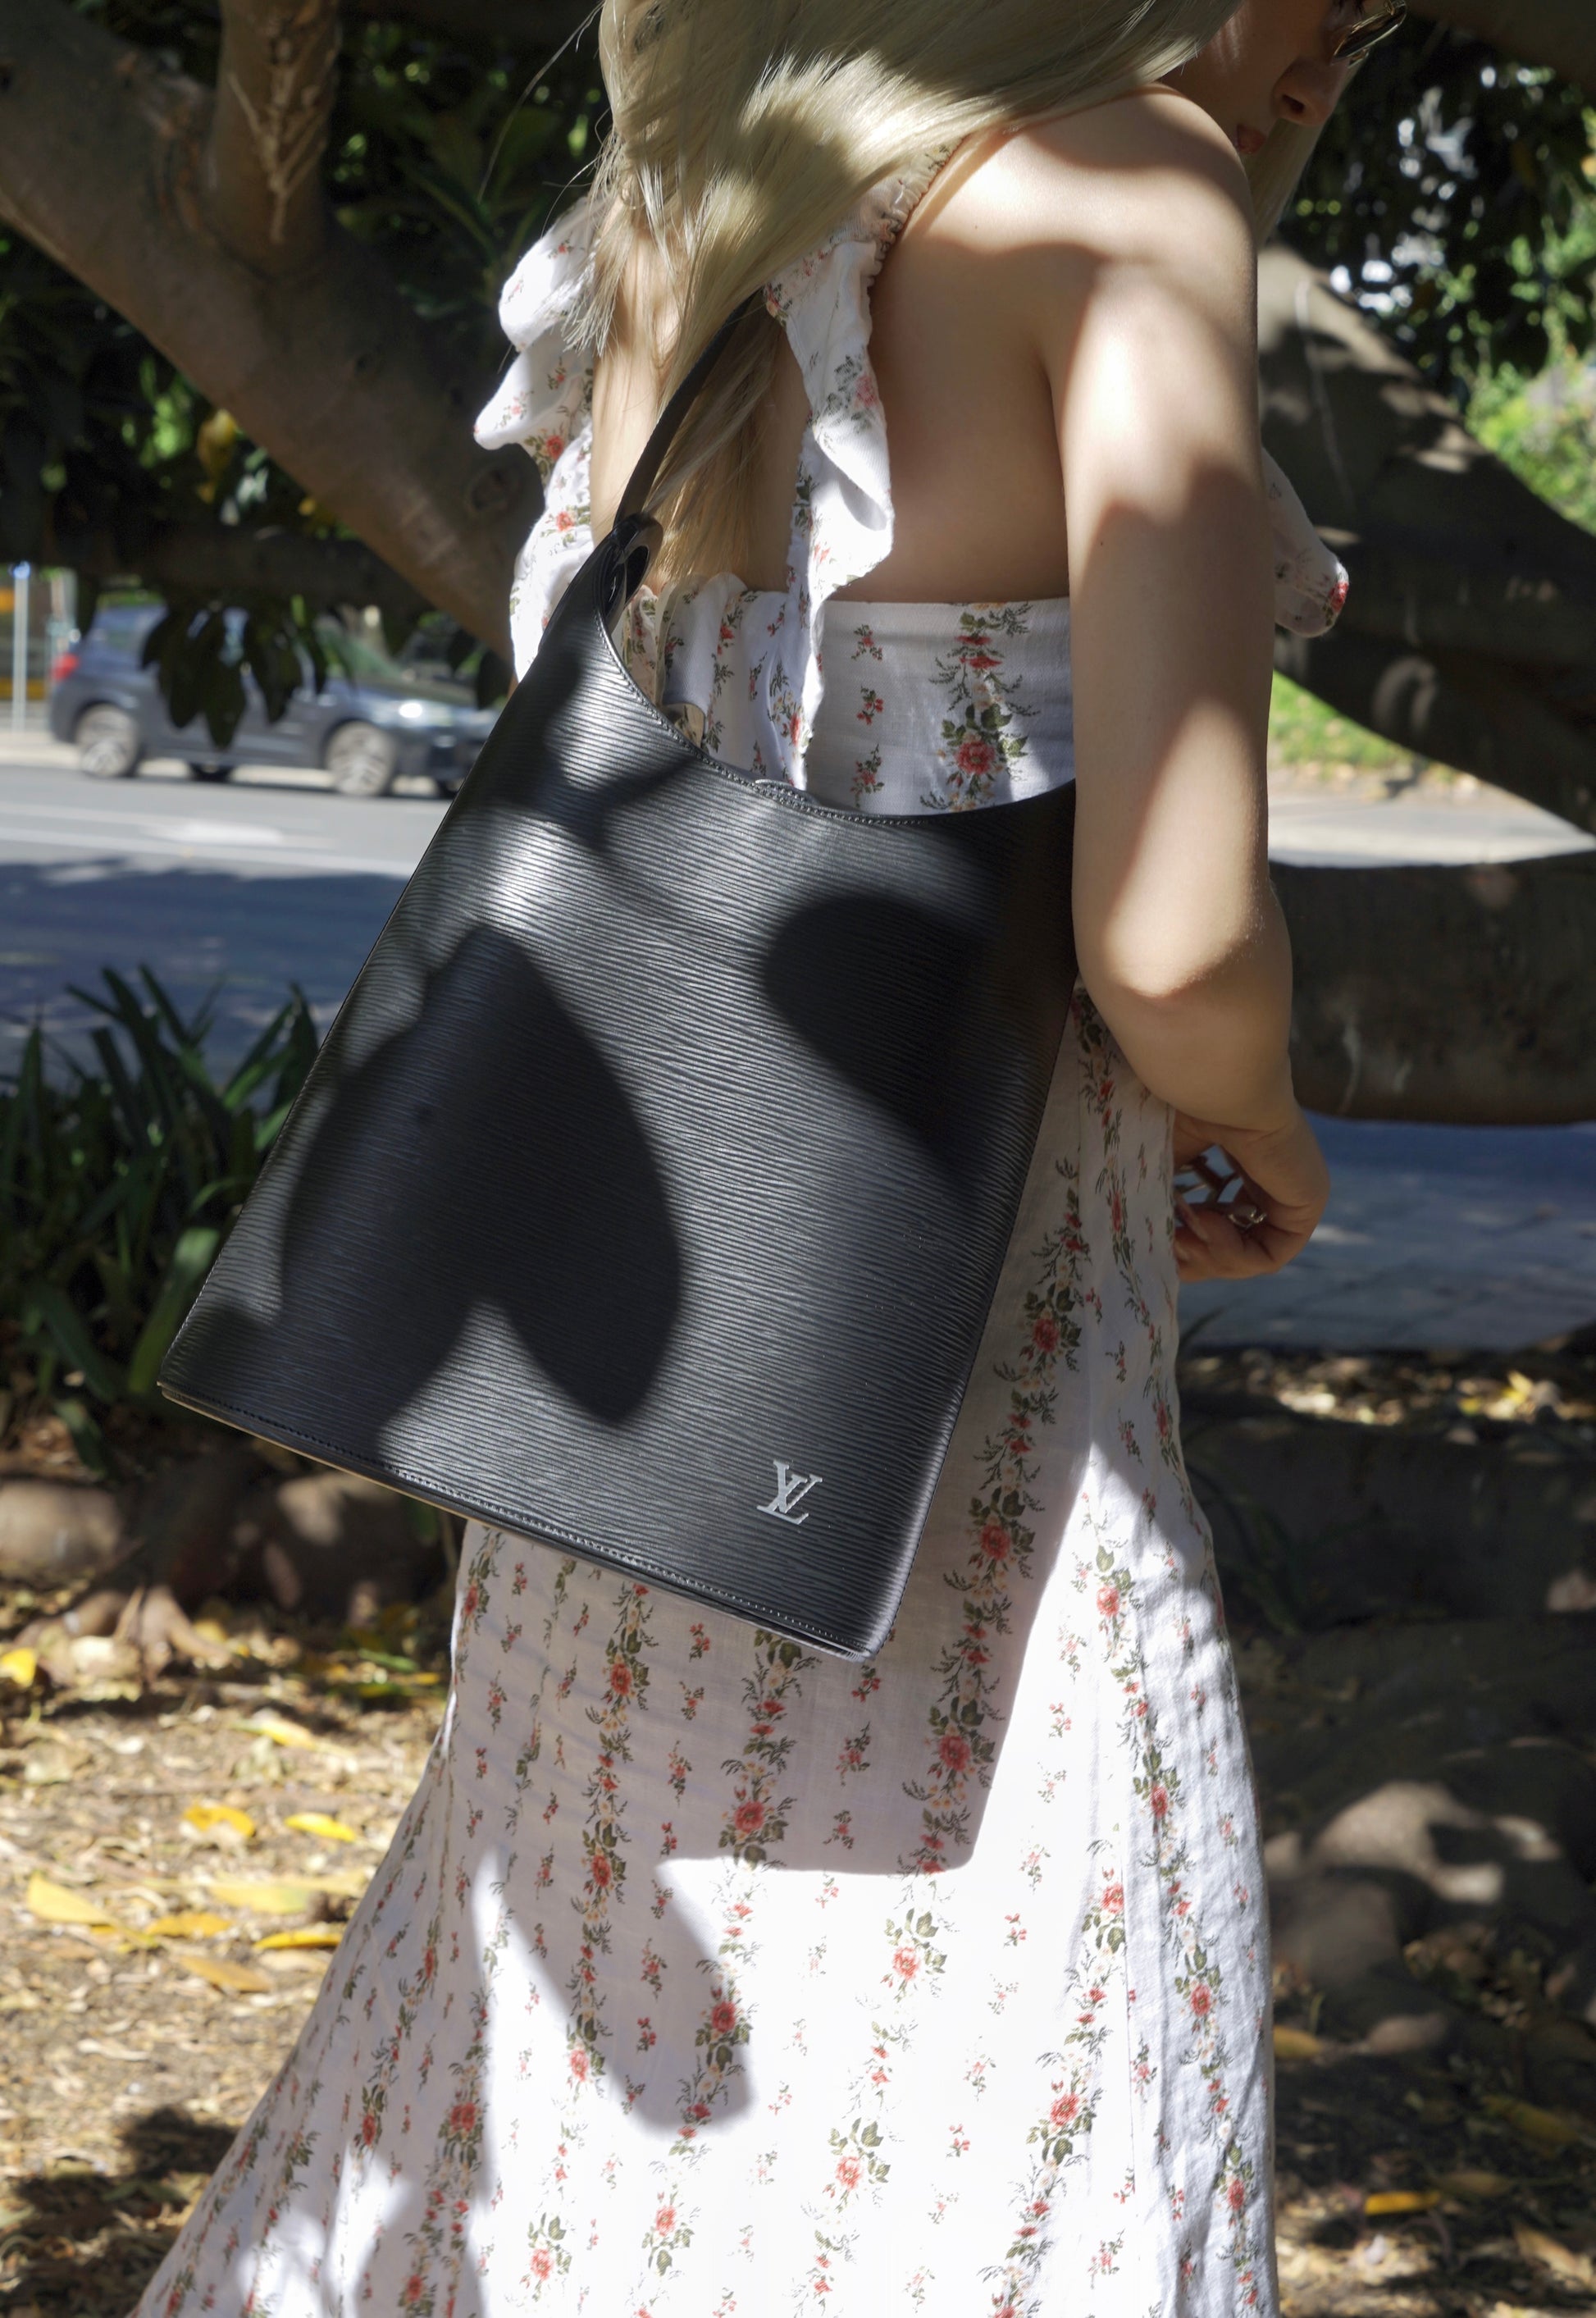 Louis Vuitton, Bags, Louis Vuitton Epi Verseau Black Bucket Handbag